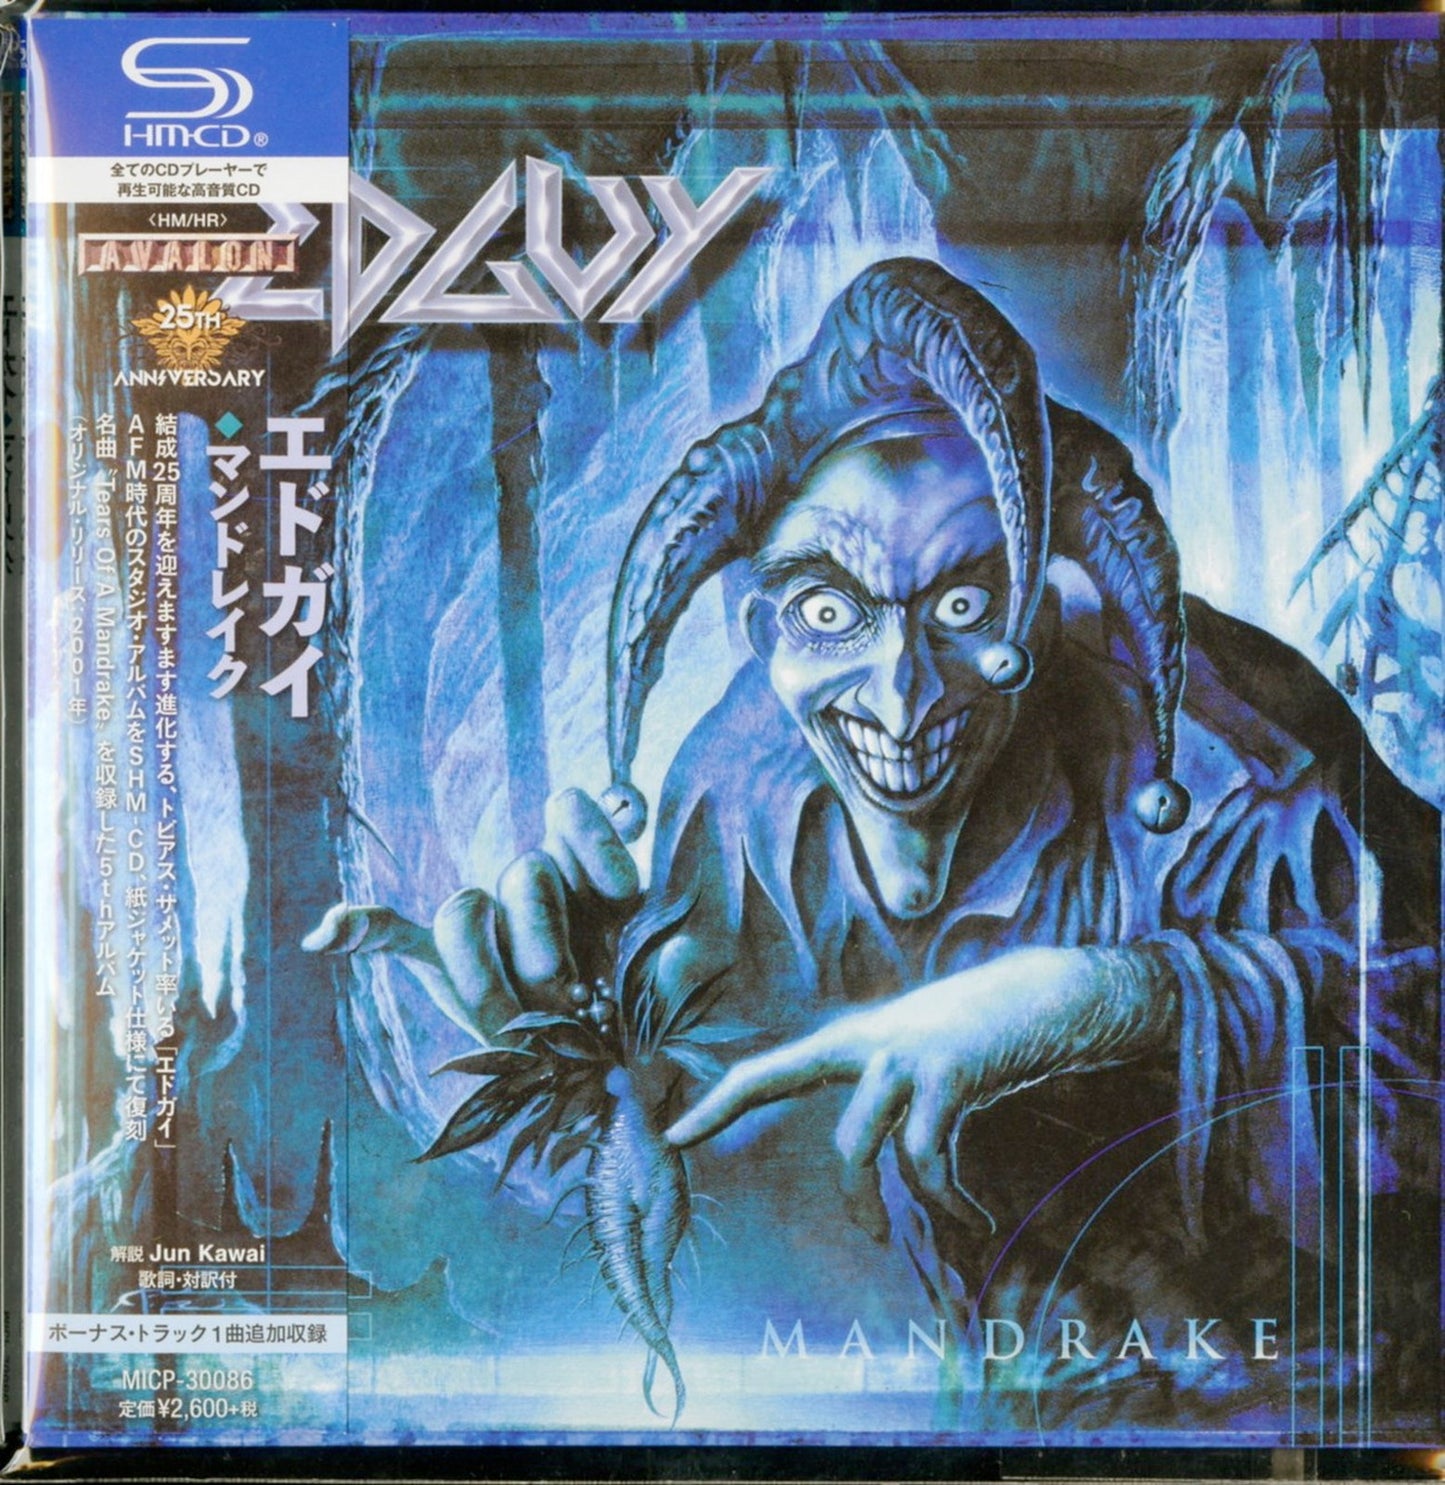 Edguy - Mandrake - Japan  Mini LP SHM-CD